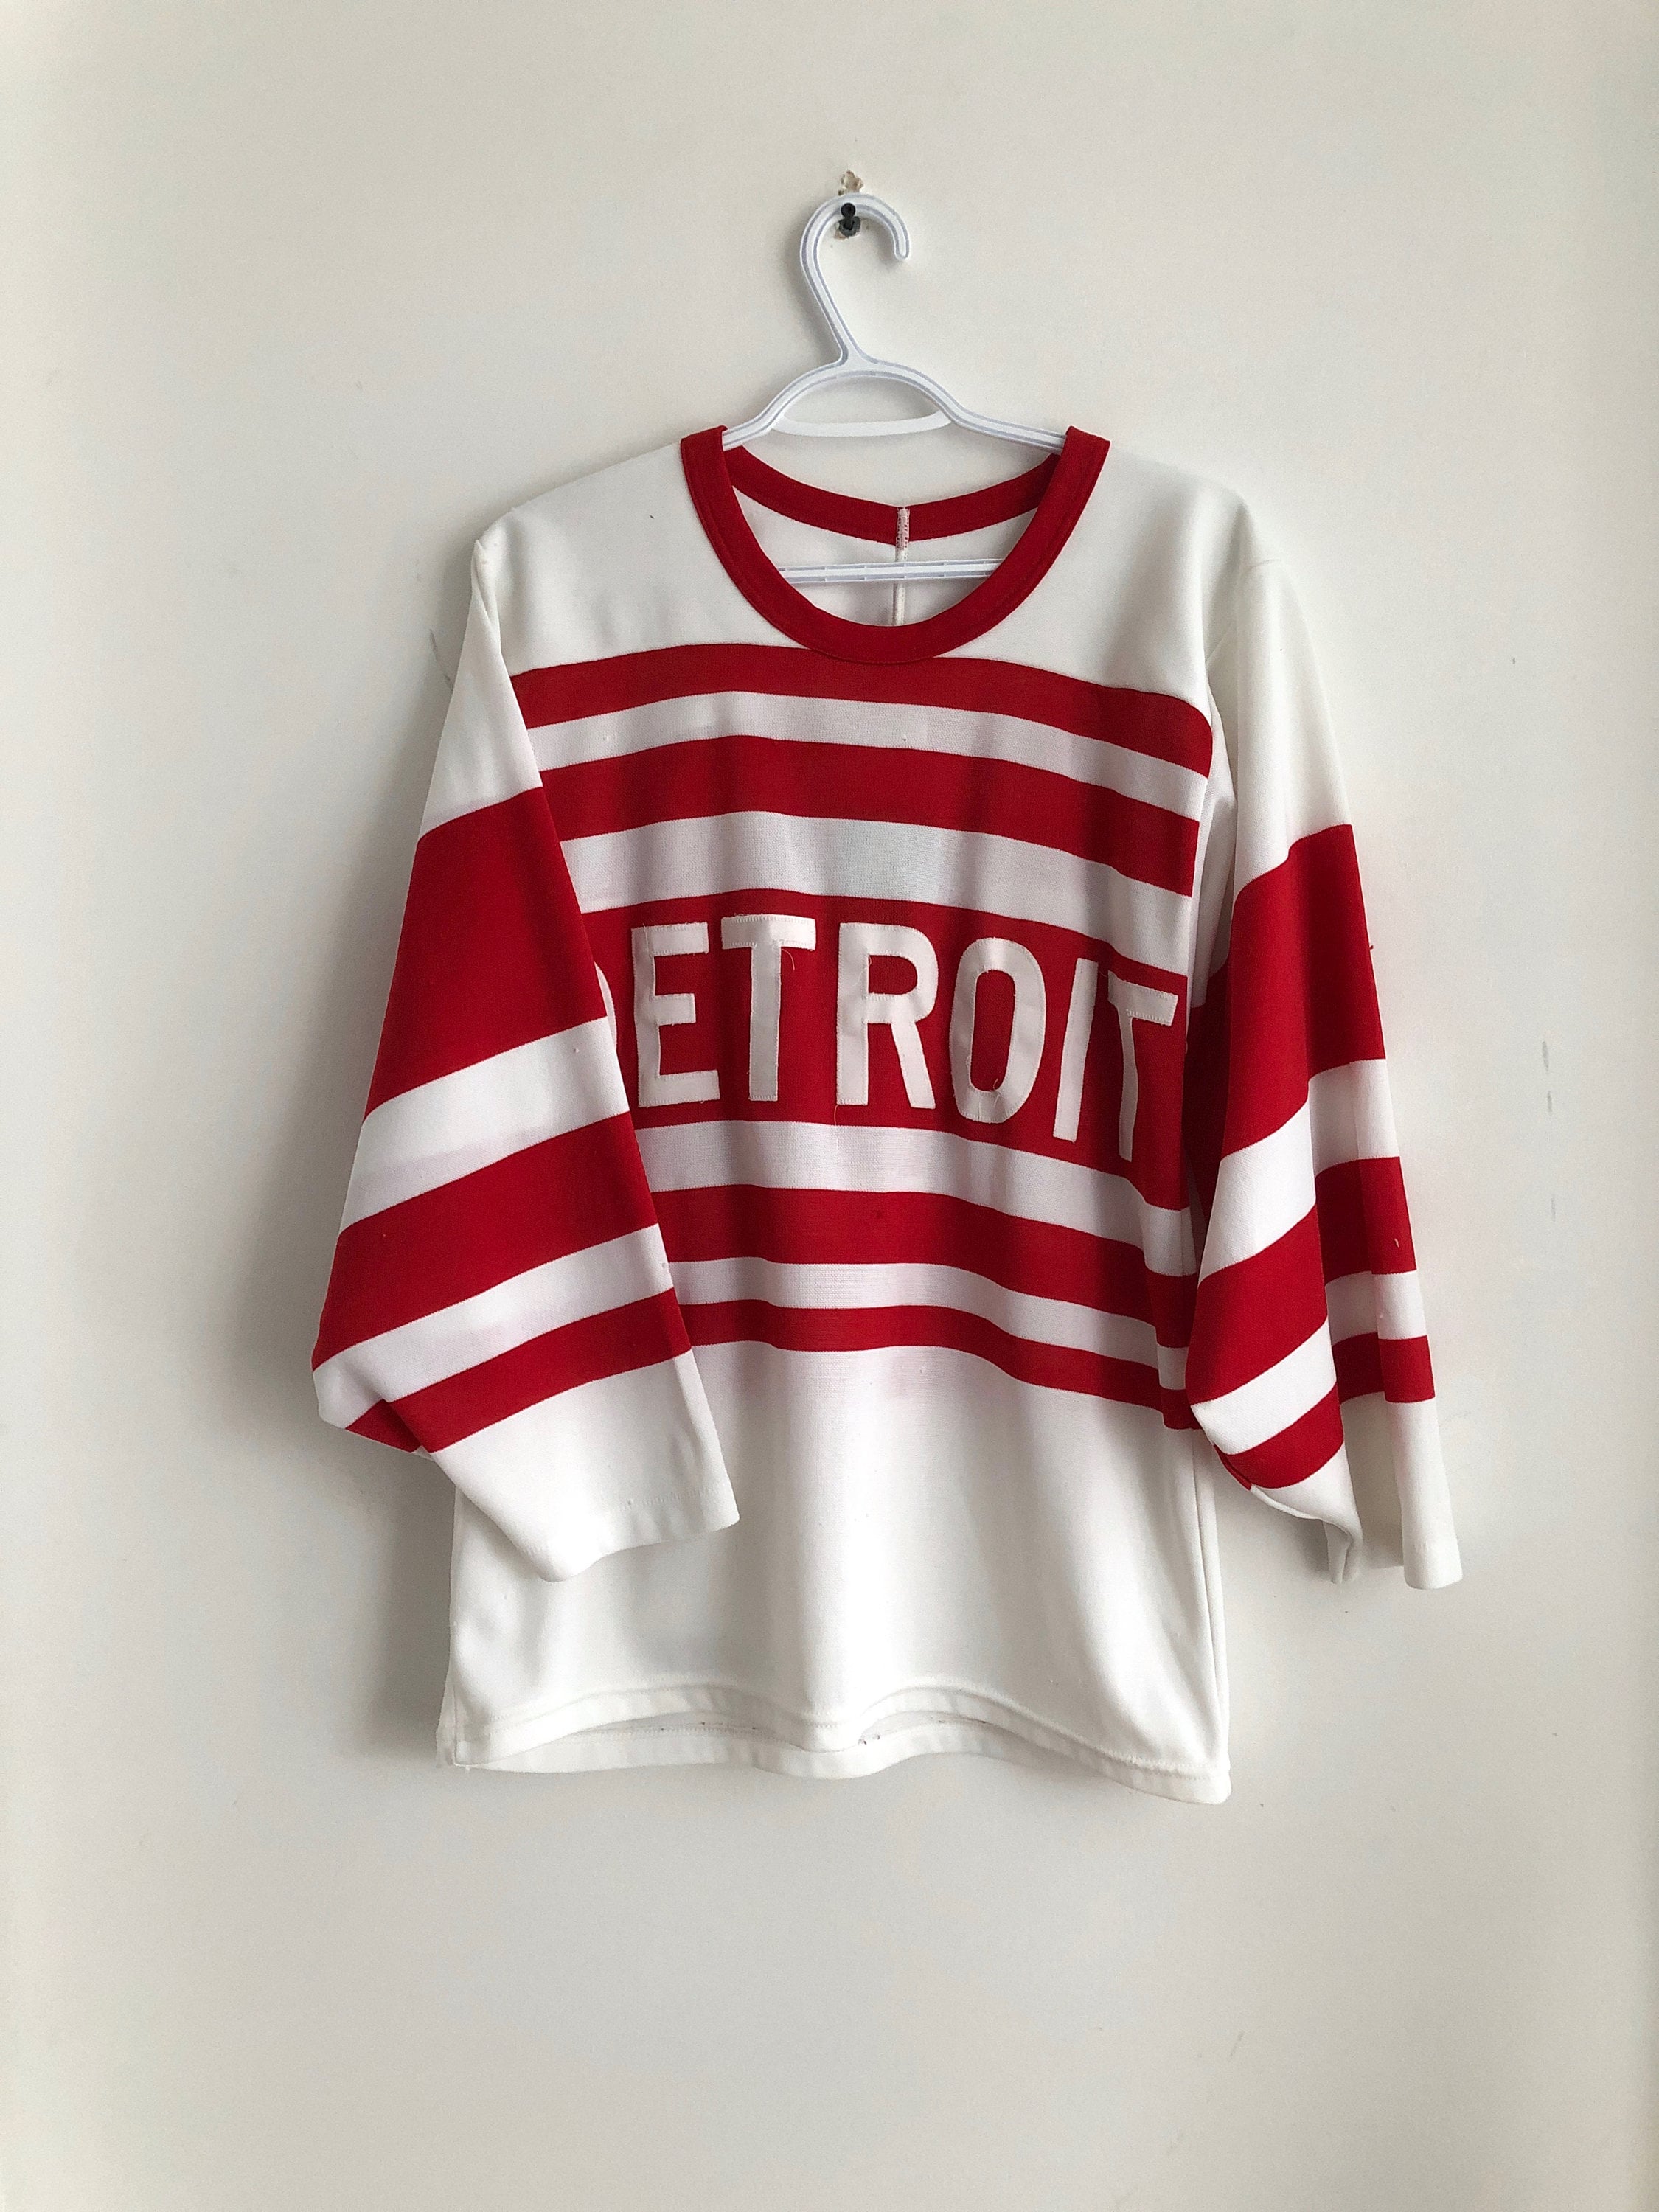 Shop Detroit Red Wings Jerseys - Gameday Detroit